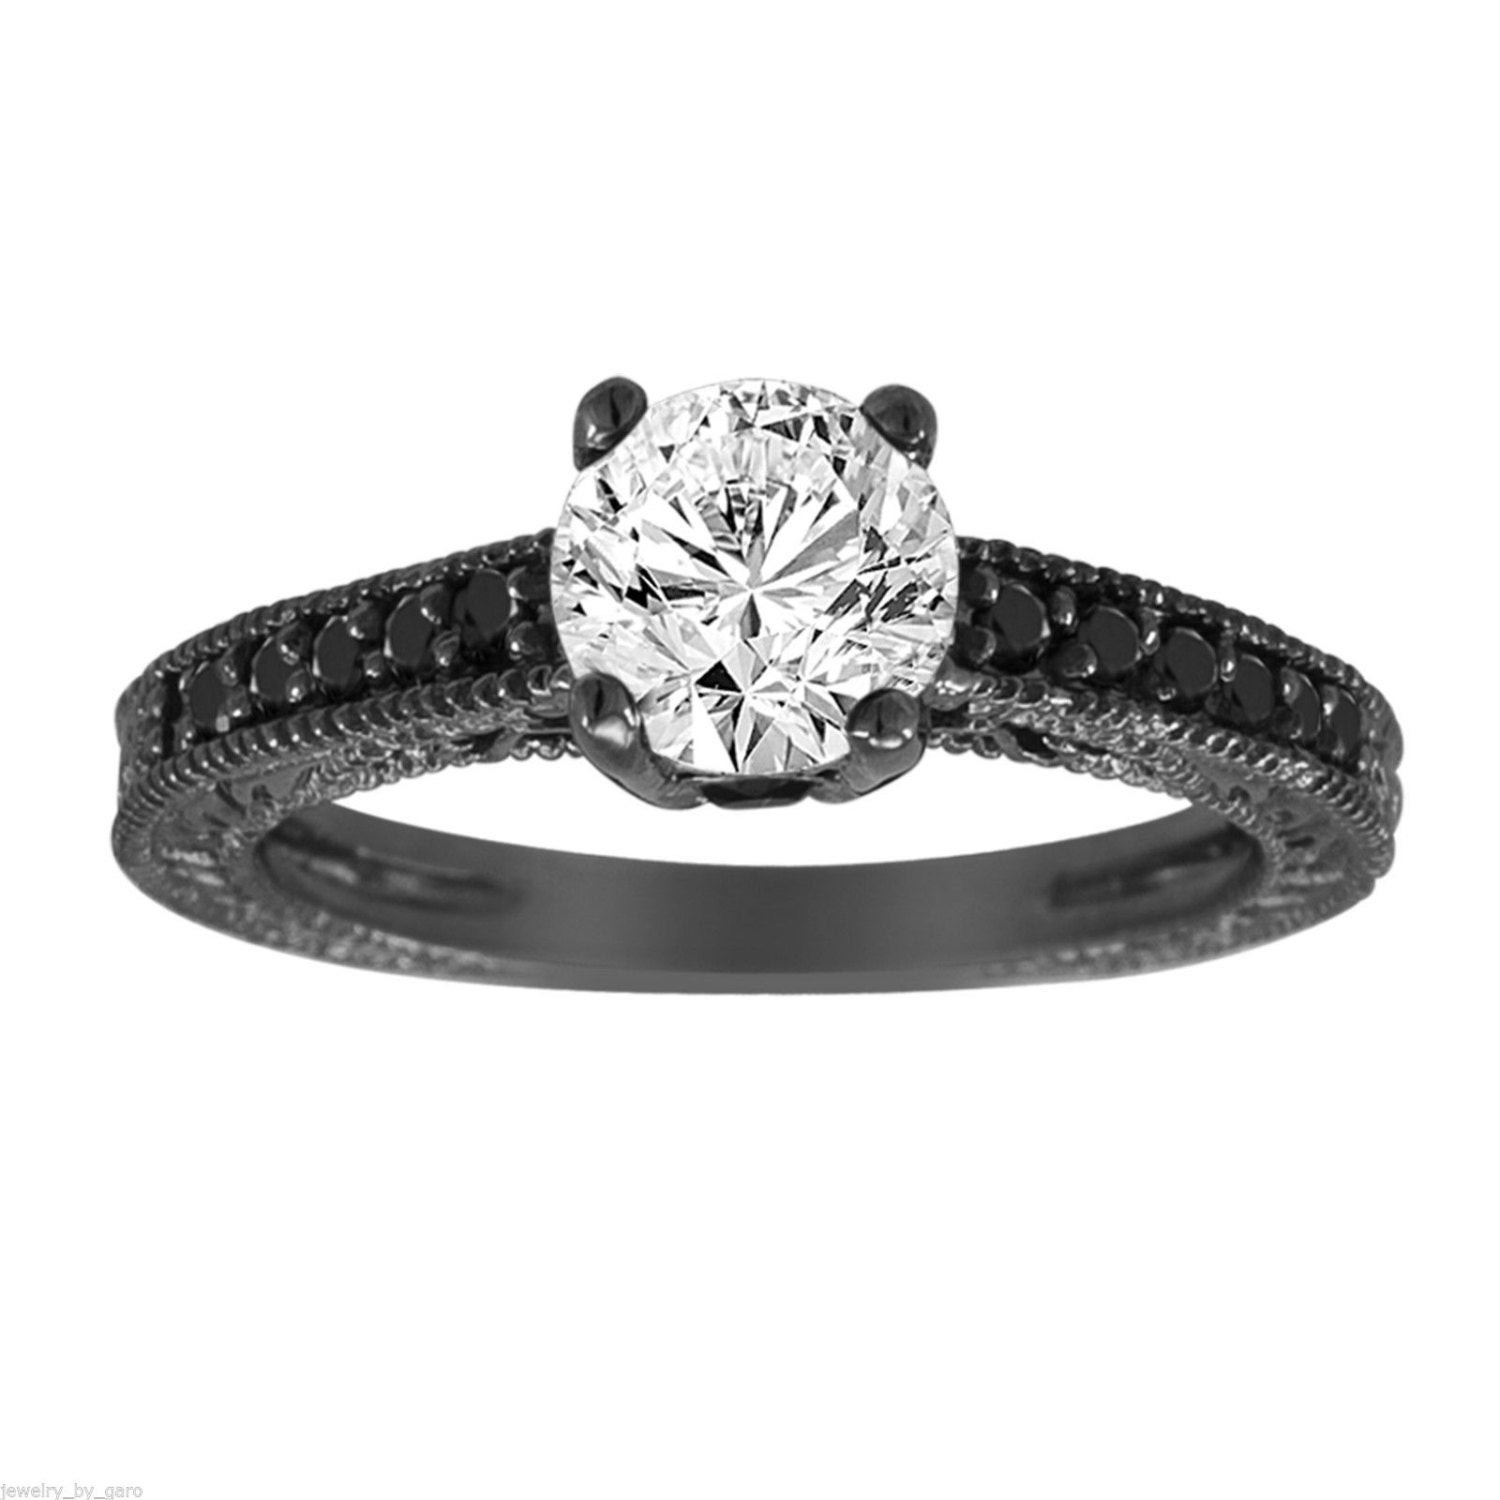 Vintage Black Diamond Engagement Rings
 Natural White & Black Diamond Engagement Ring Antique Vintage